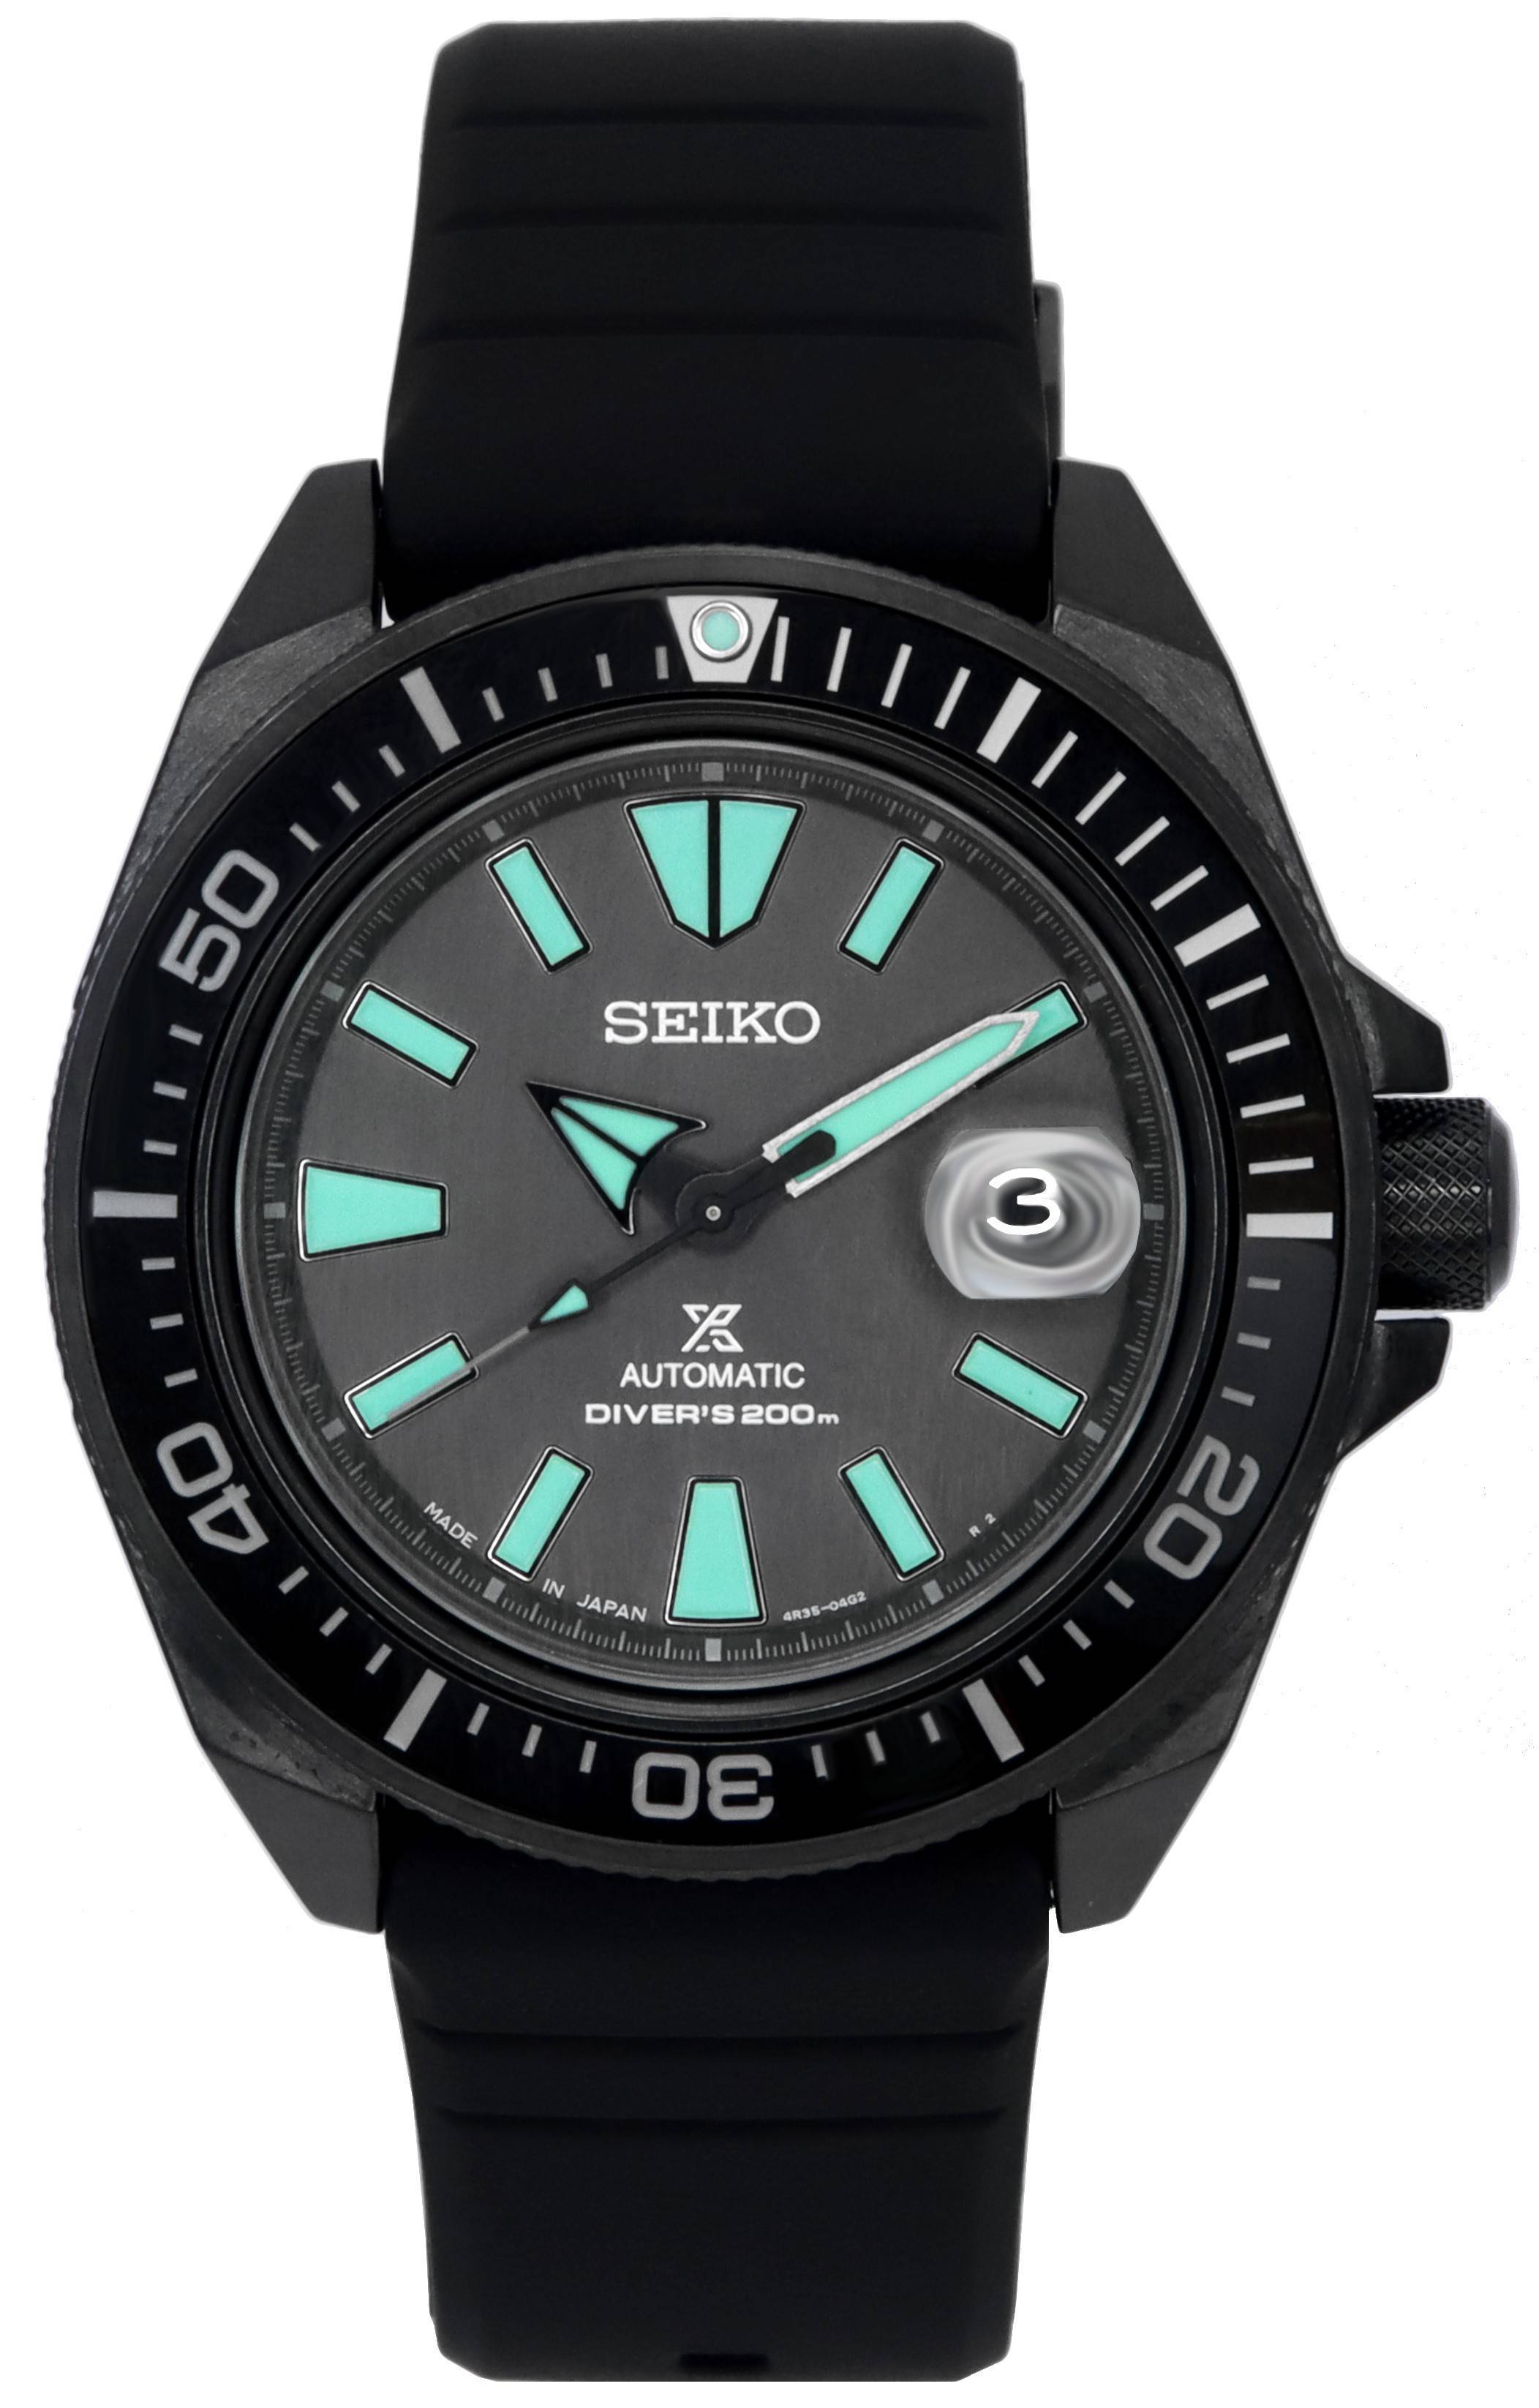 Seiko Prospex Samurai Black Series Limited Edition Automatic Diver's SRPH97 SRPH97J1 SRPH97J 200M Men's Watch